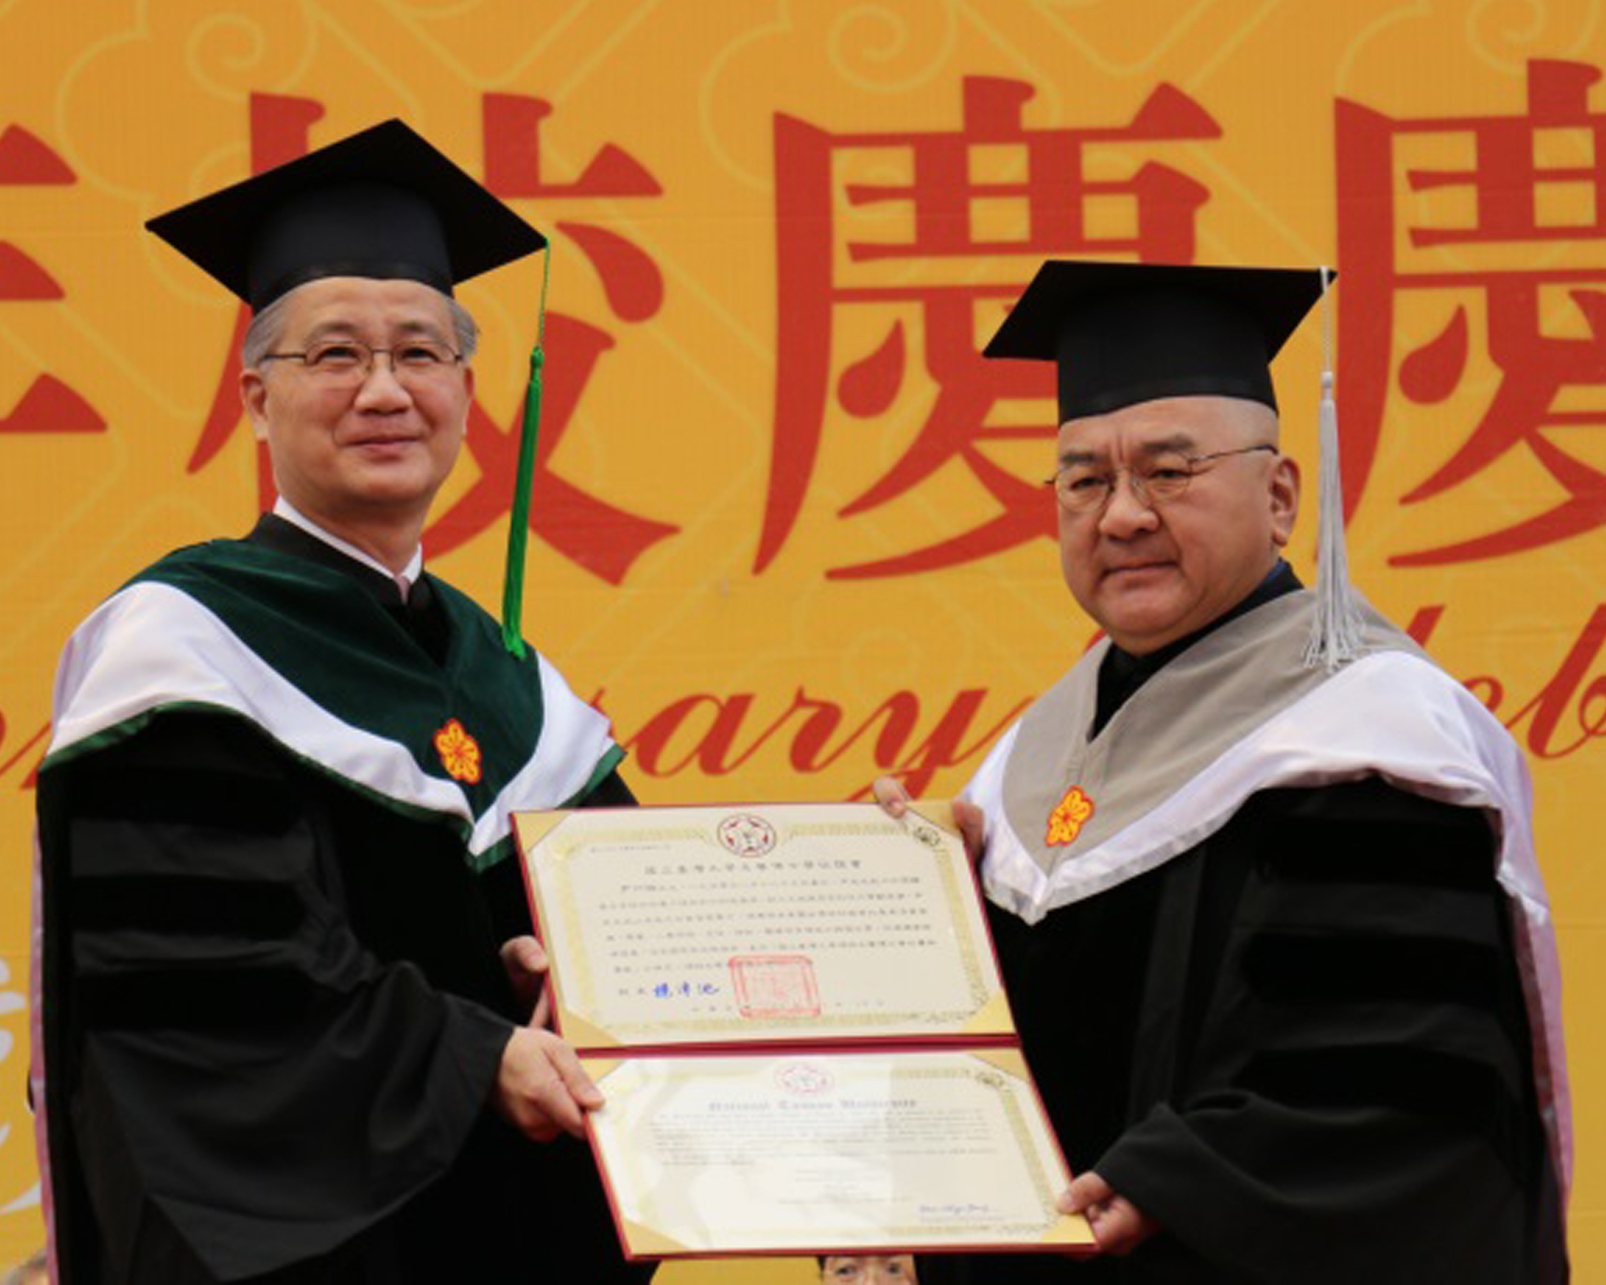 NTU alumnus Samuel Yin (right) receives Honorary Doctorate from President Yang (left).